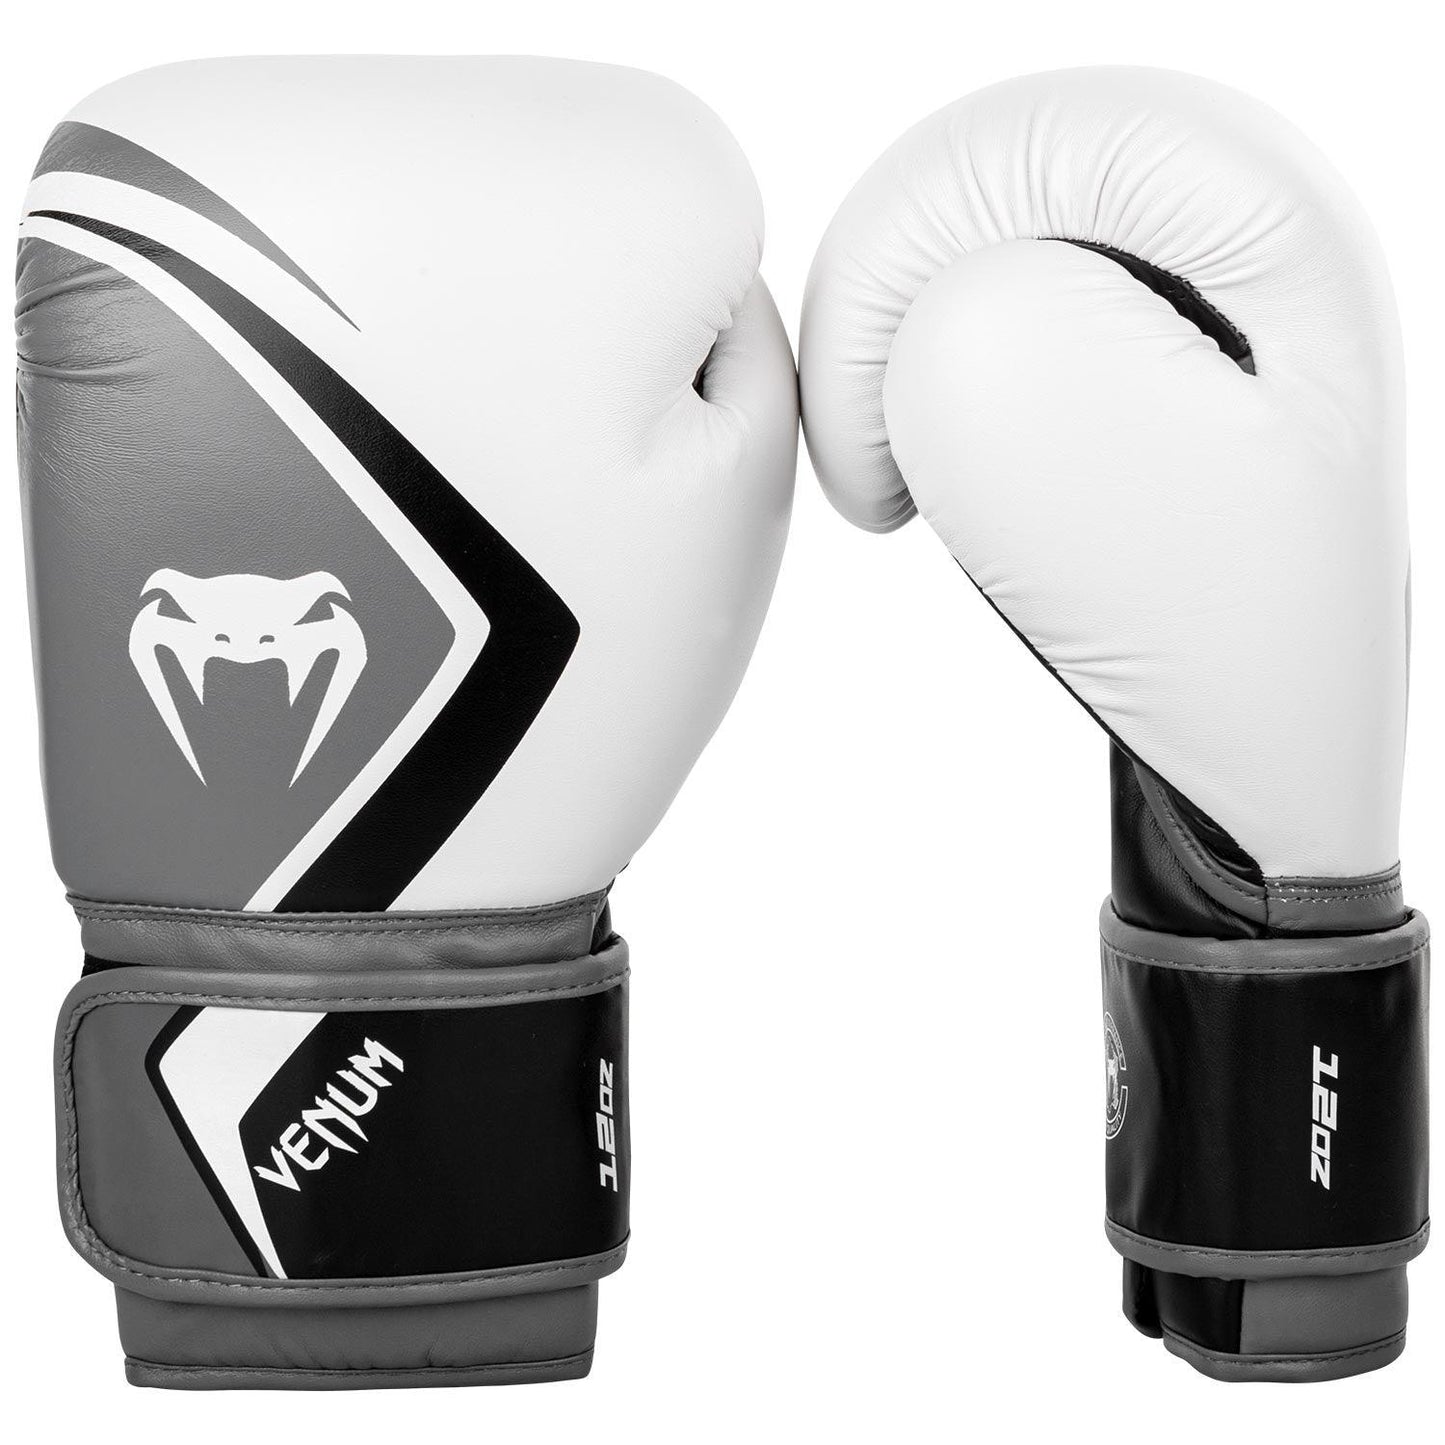 Venum Boxing Gloves Contender 2.0 - White/Grey-Black Picture 1